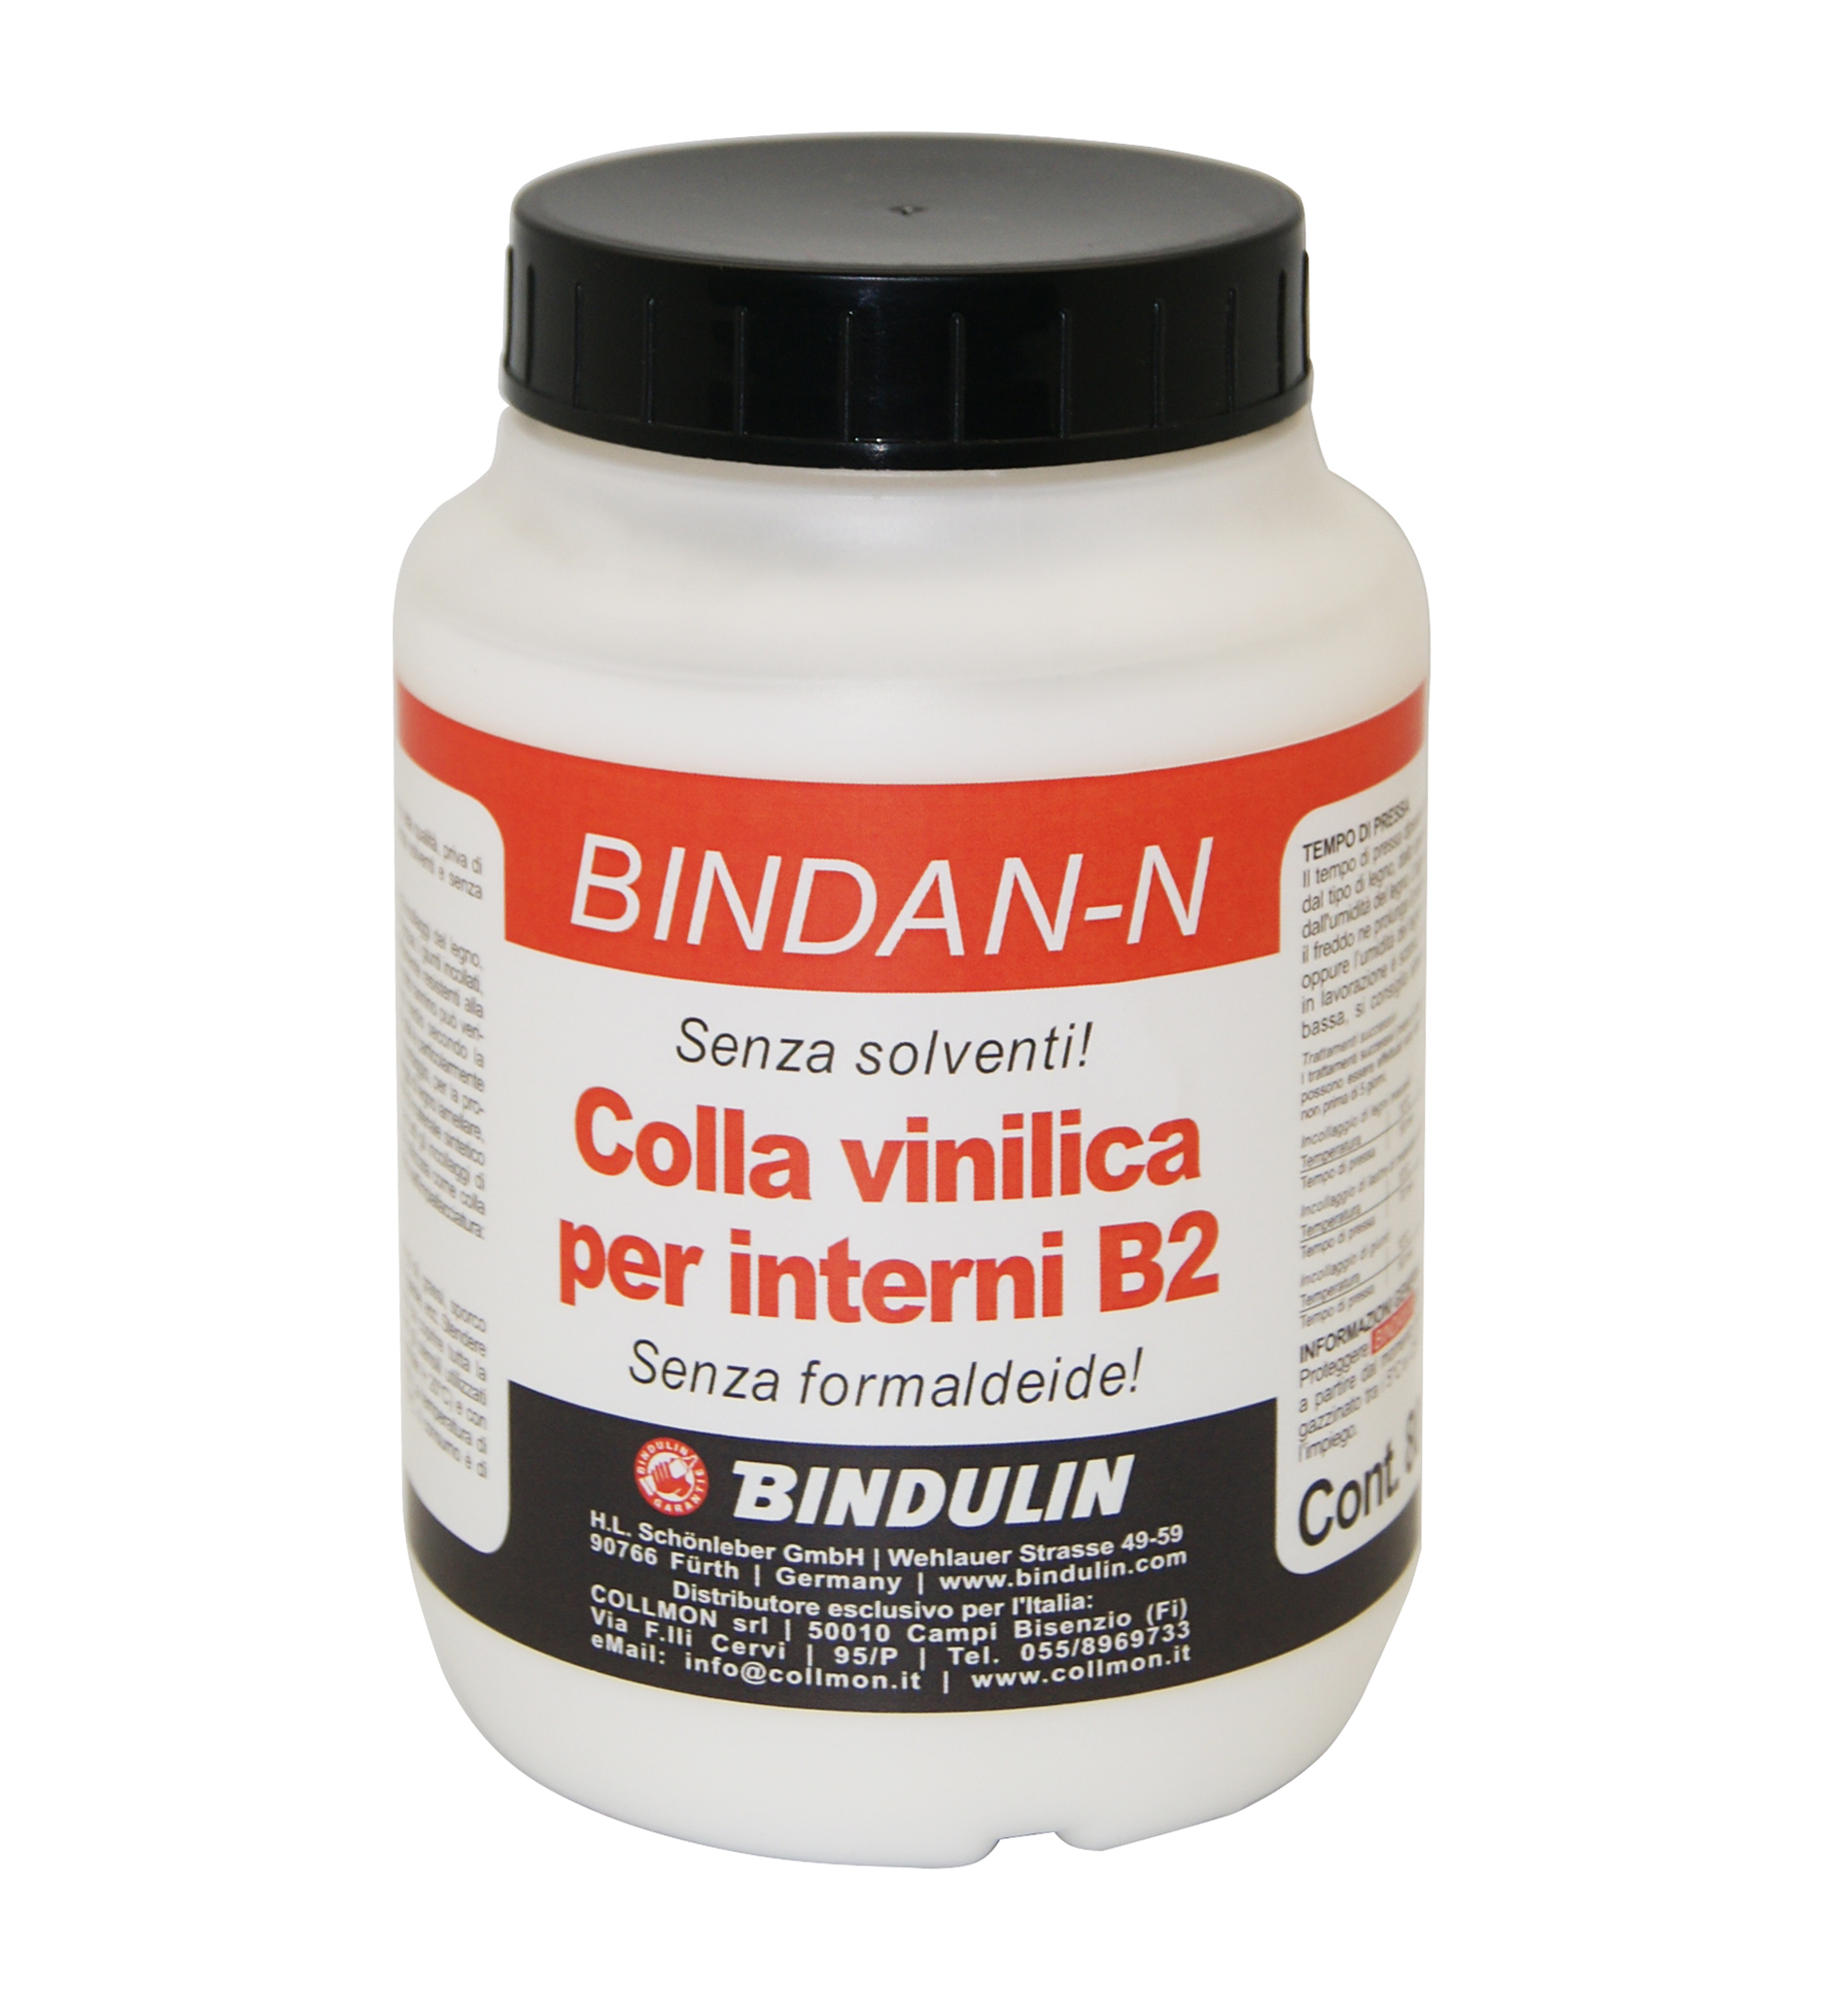 Bindulin - bindan-n vinilico b2 traspar. 800 g